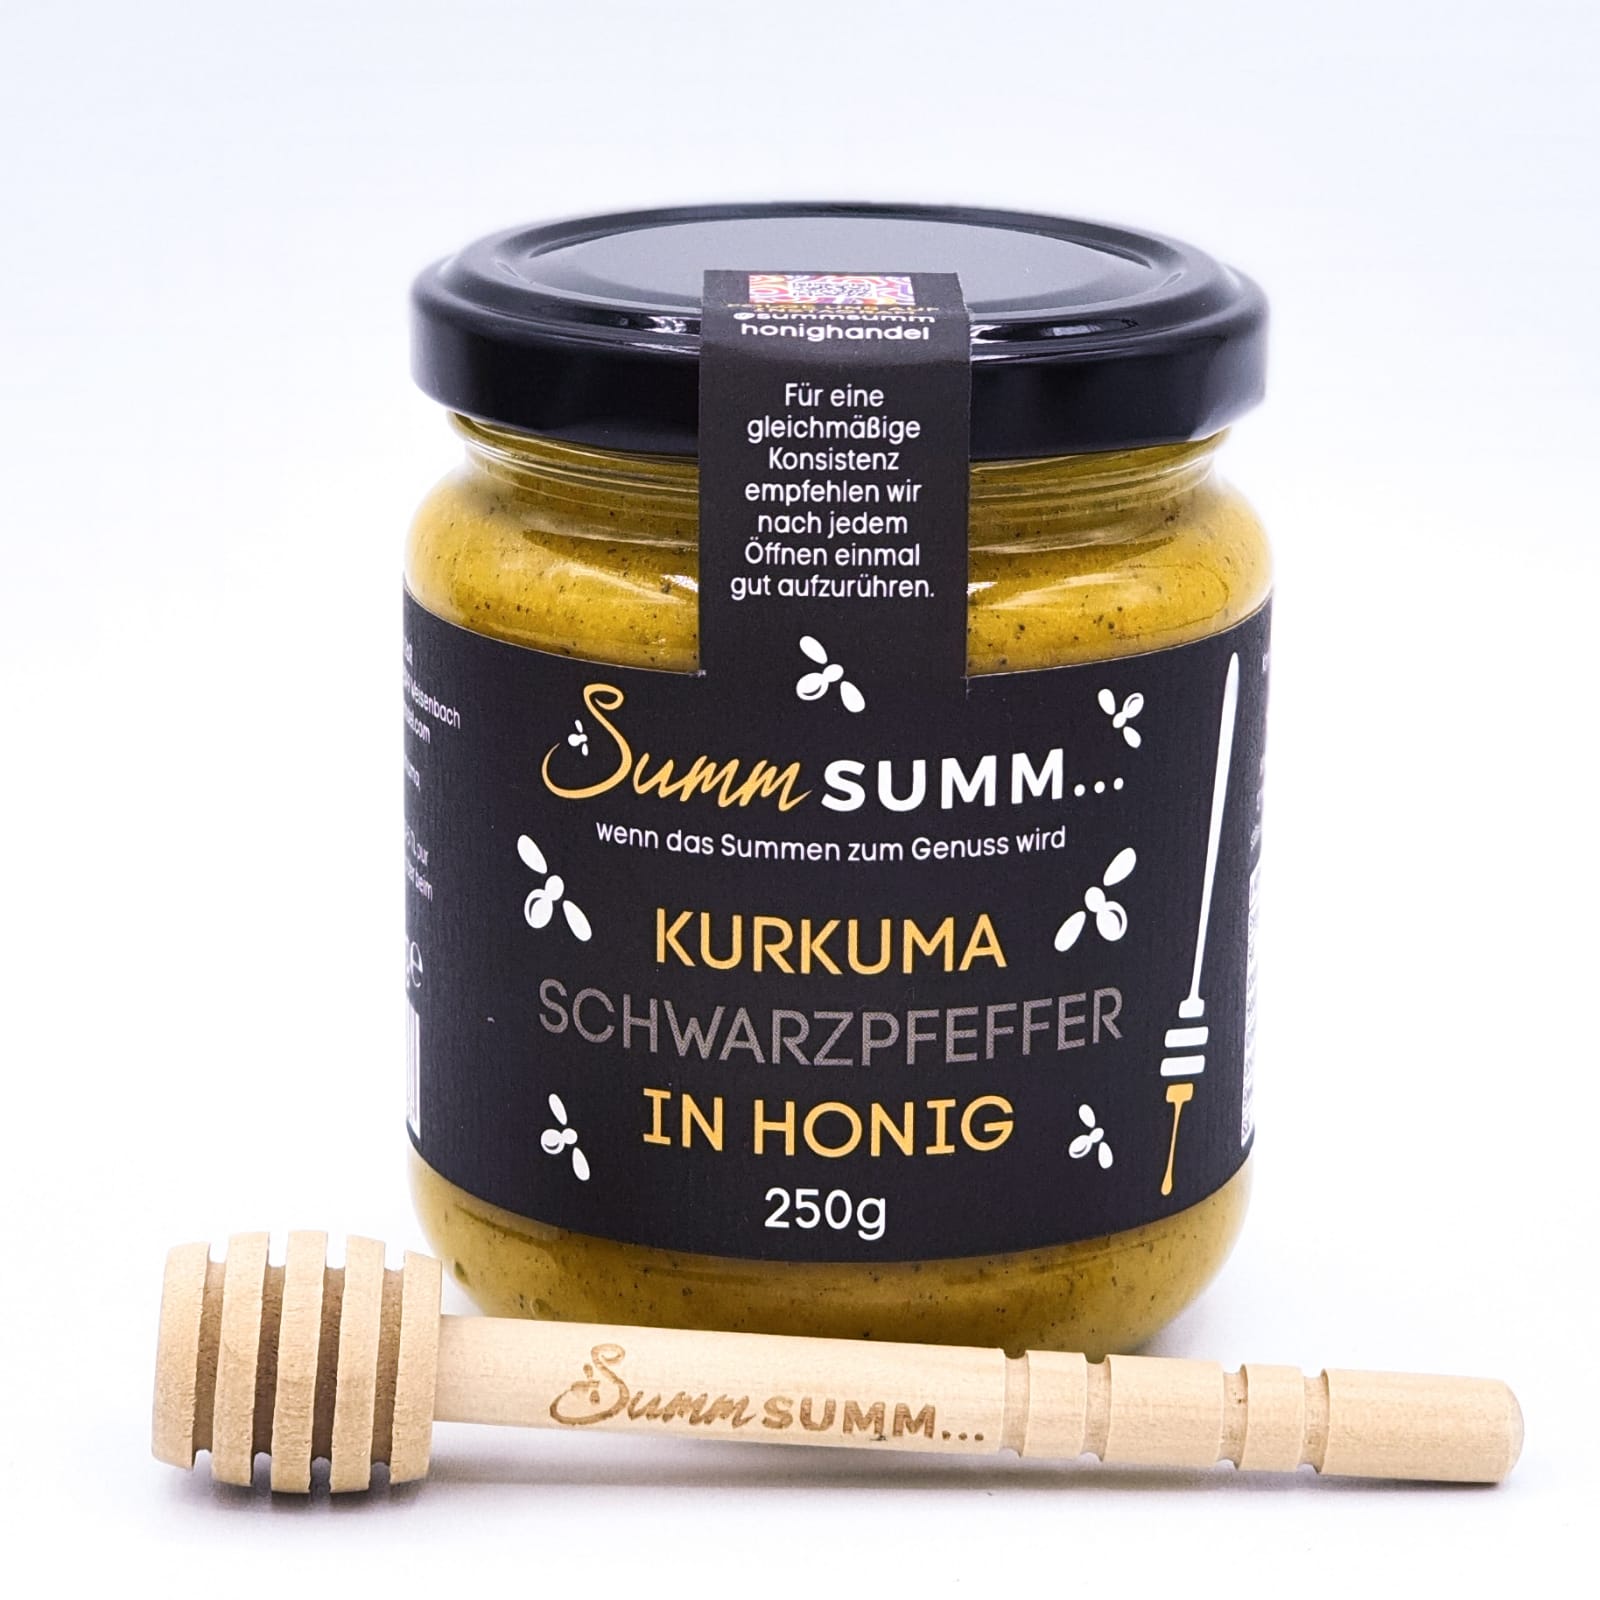 Kurkuma & Schwarzpfeffer in Honig 250 g, Summ Summ